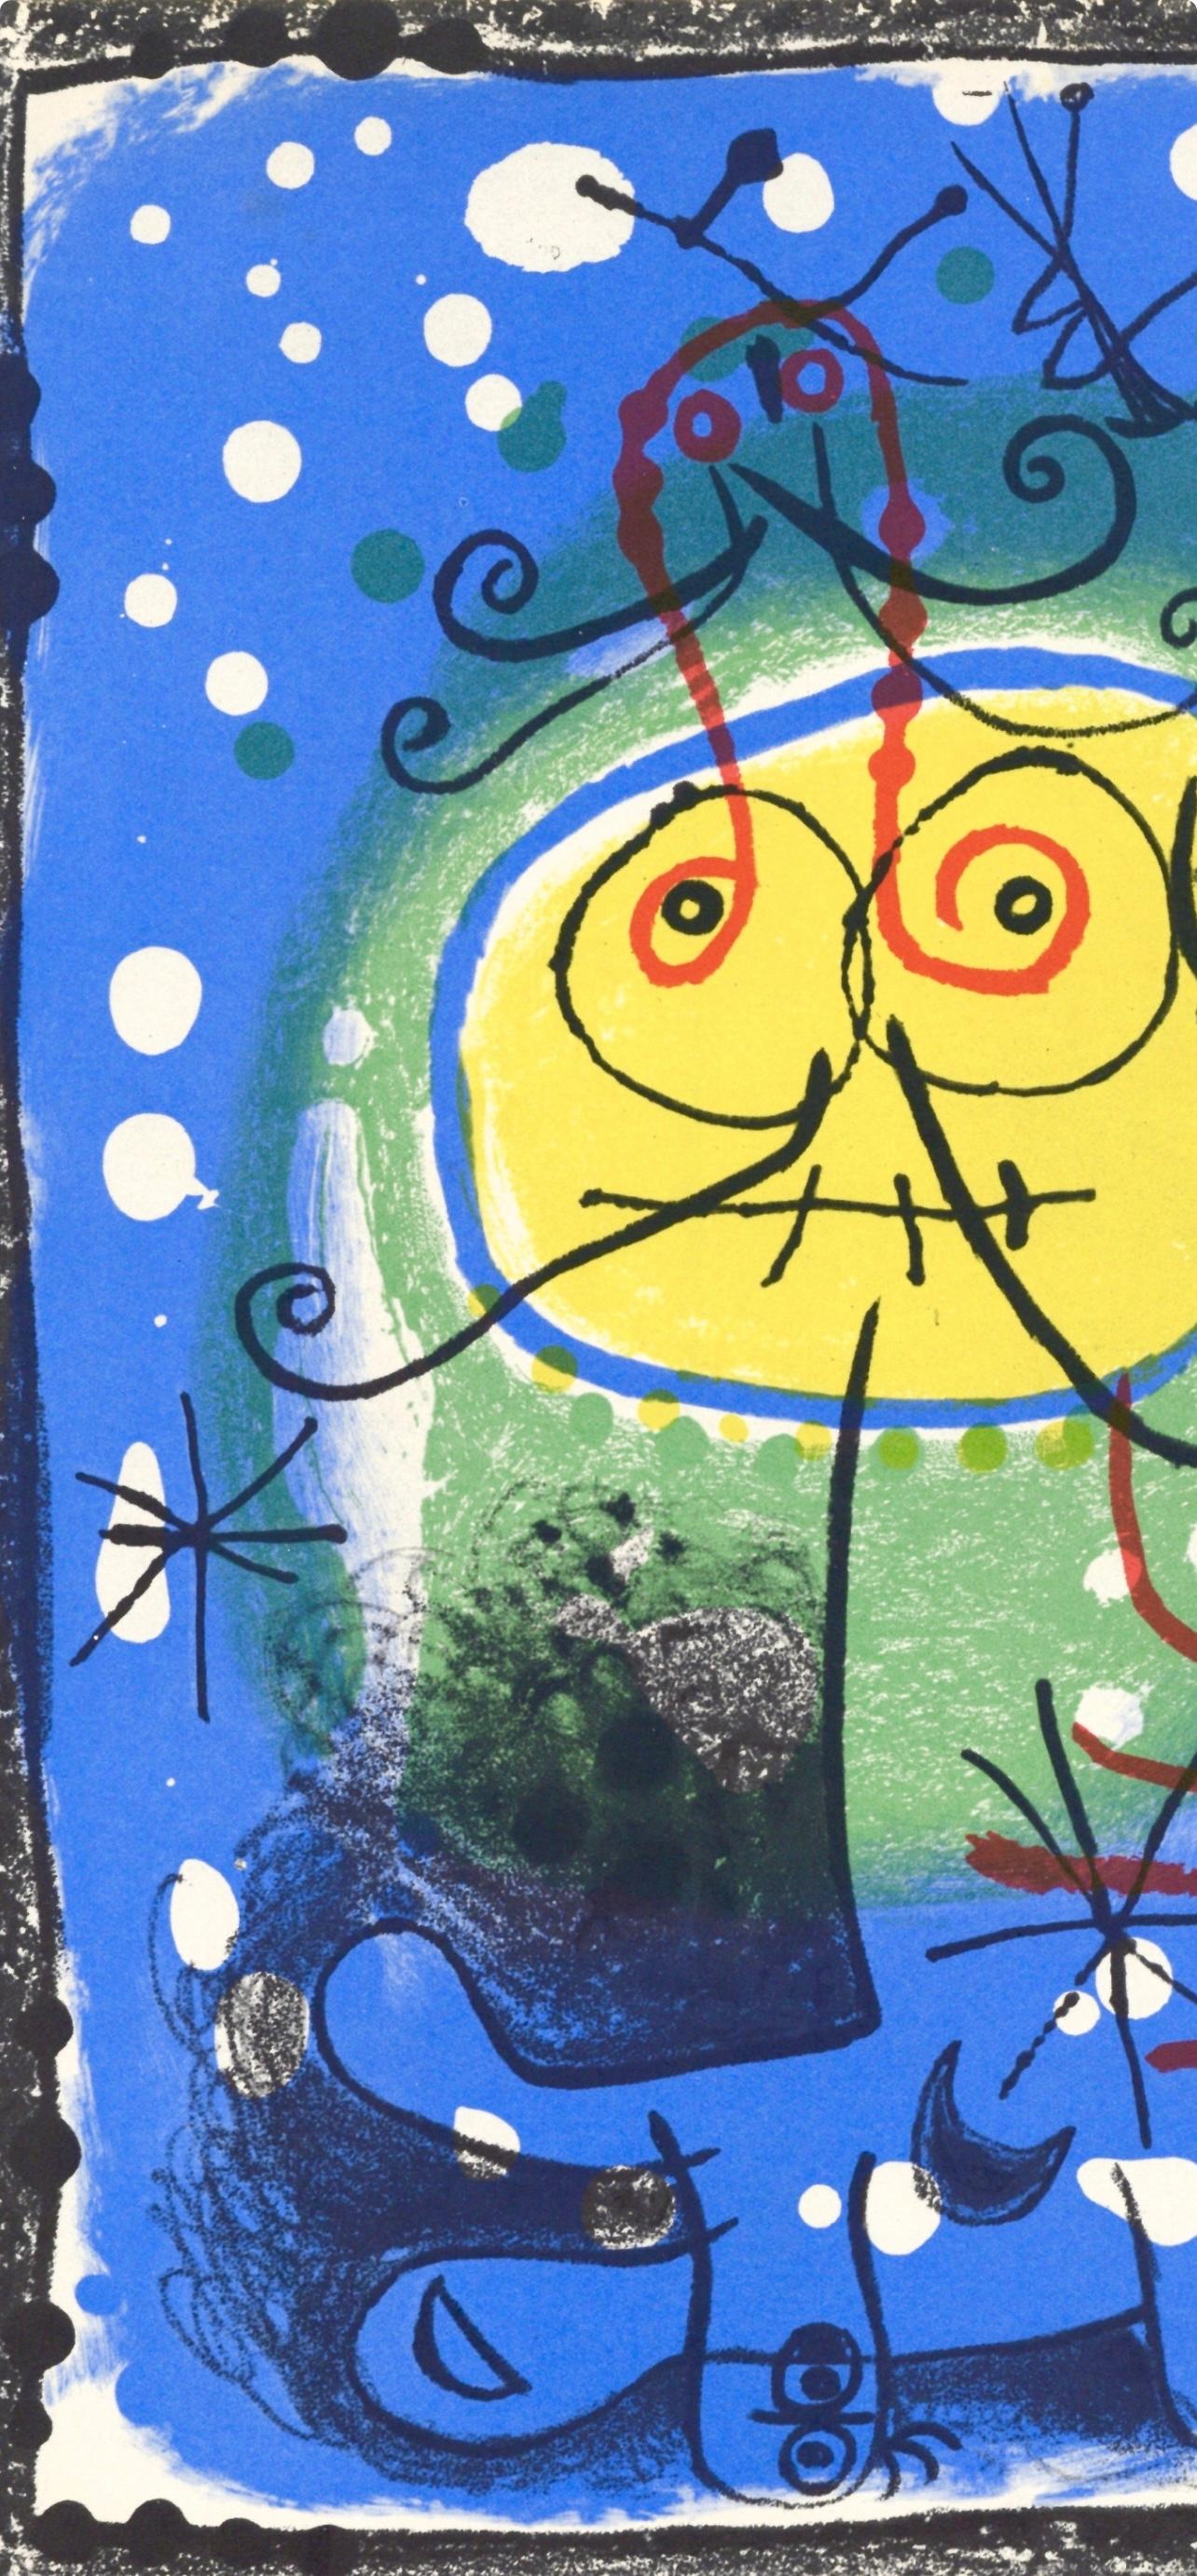 Miró, Personnage sur fond bleu, XXe Siècle (after) - Modern Print by Joan Miró